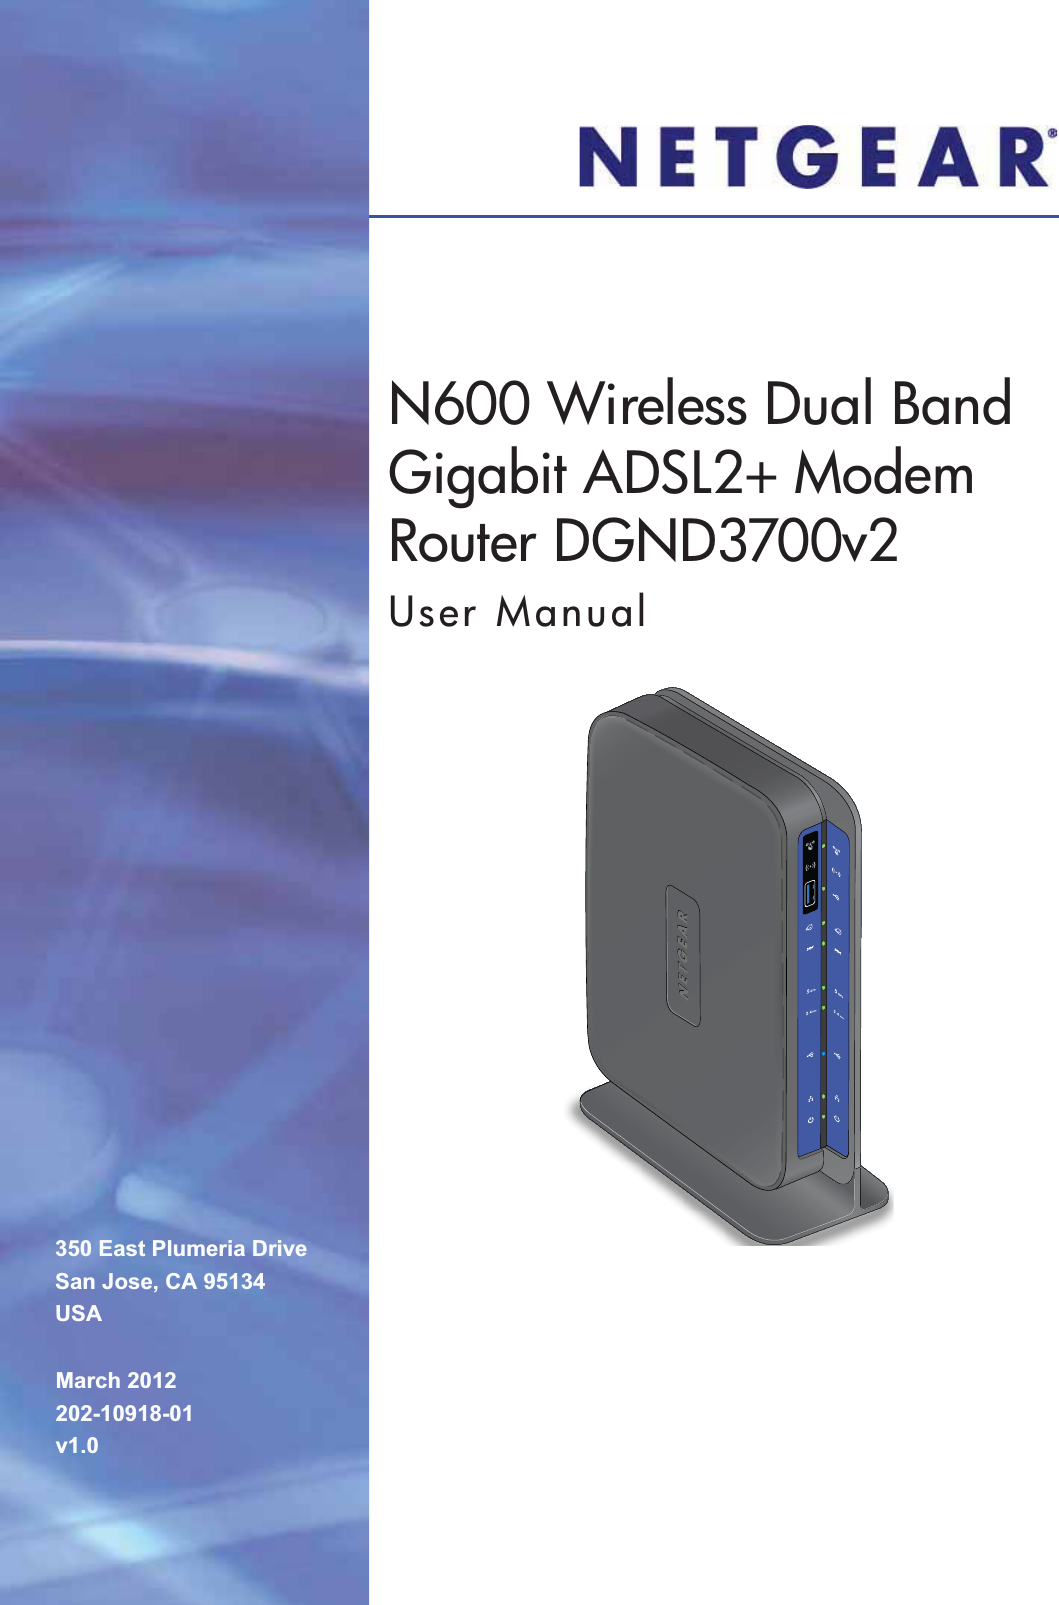 350 East Plumeria DriveSan Jose, CA 95134USAMarch 2012202-10918-01v1.0N600 Wireless Dual Band Gigabit ADSL2+ Modem Router DGND3700v2User Manual